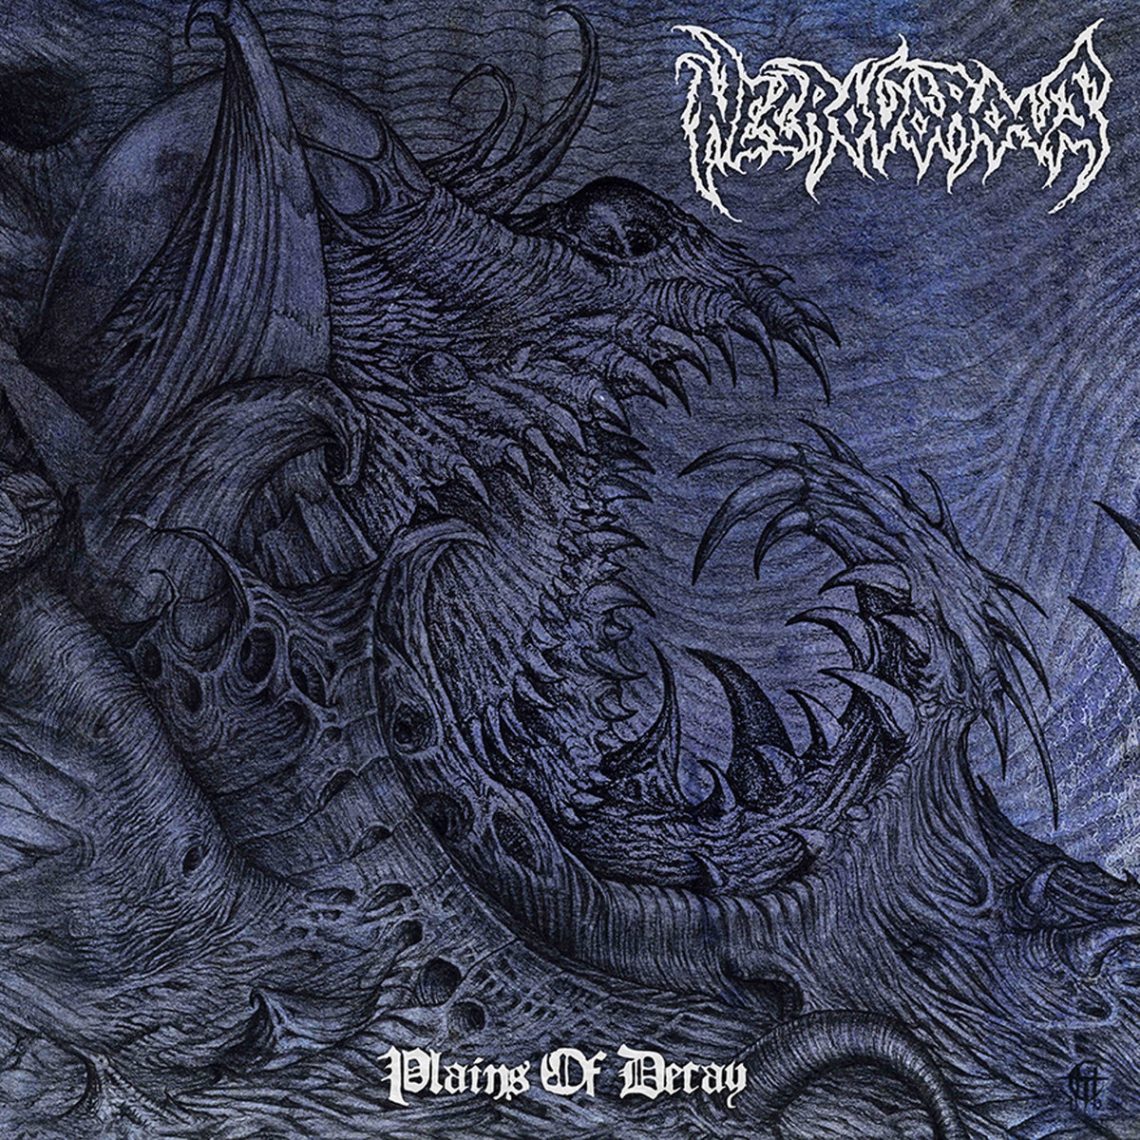 Necrovorous – Plains of Decay Album Review